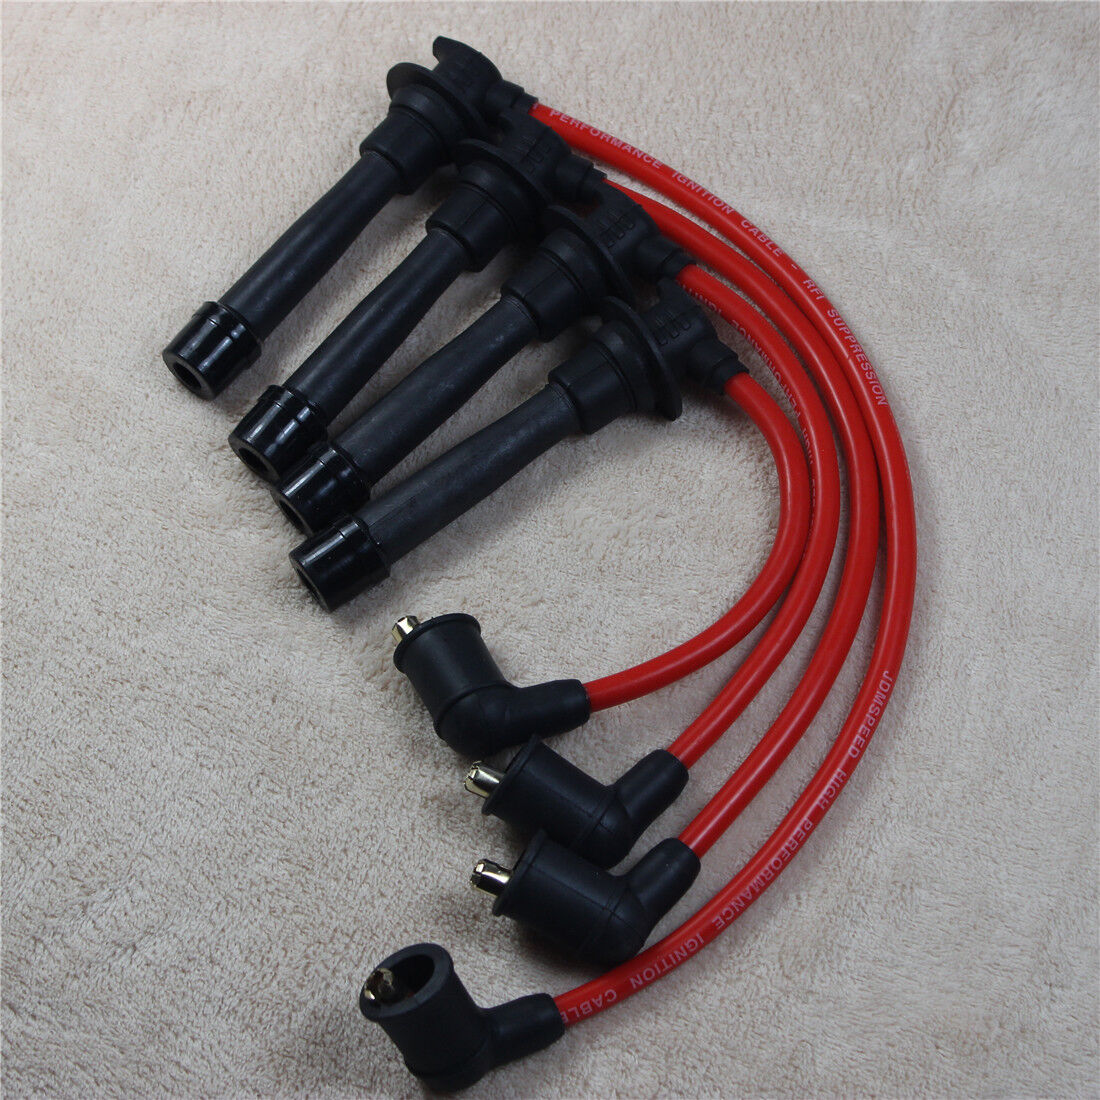 Red JDMSPEED Ignition Spark Plug Wires Set FOR 1990-00 Mazda Miata 1.6L 1.8L